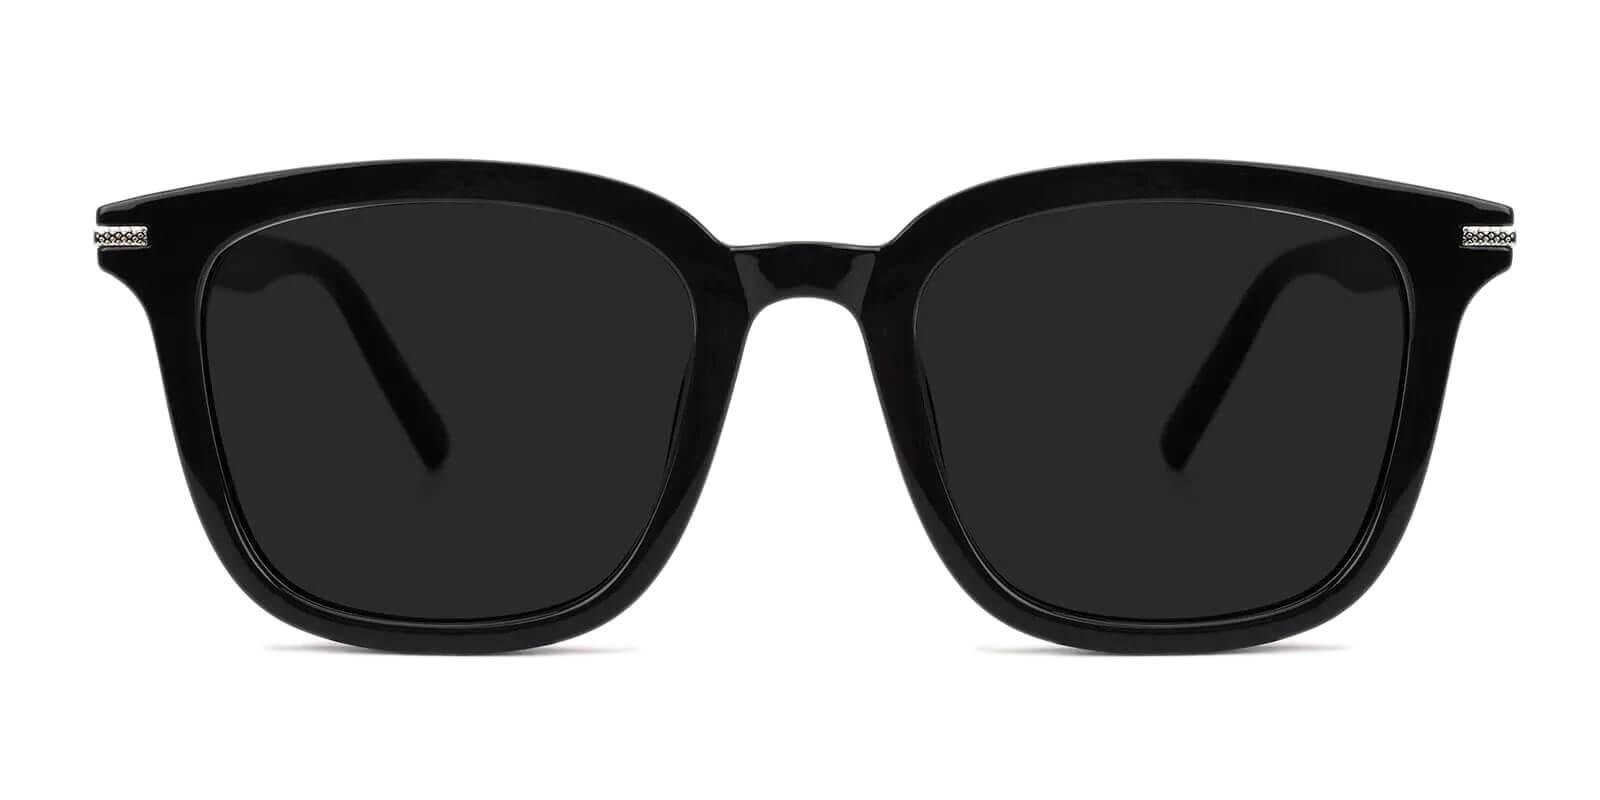 Willow Black Acetate Fashion , Sunglasses , UniversalBridgeFit Frames from ABBE Glasses